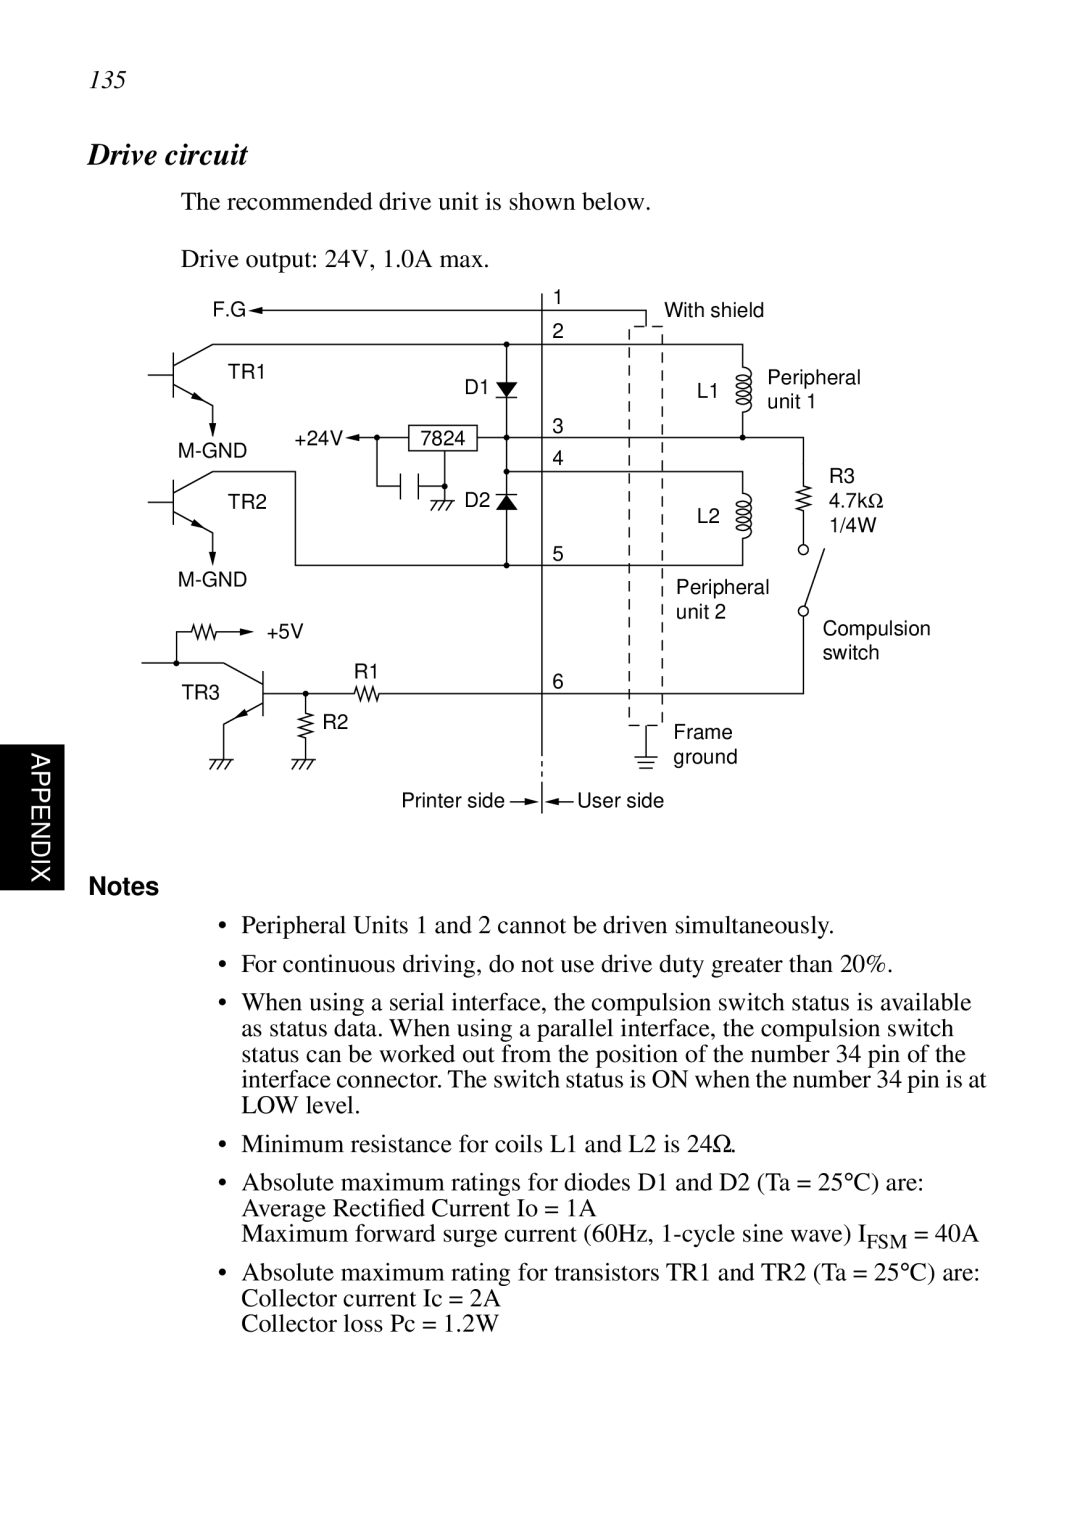 Star Micronics SP298 user manual Drive circuit, Appendix 